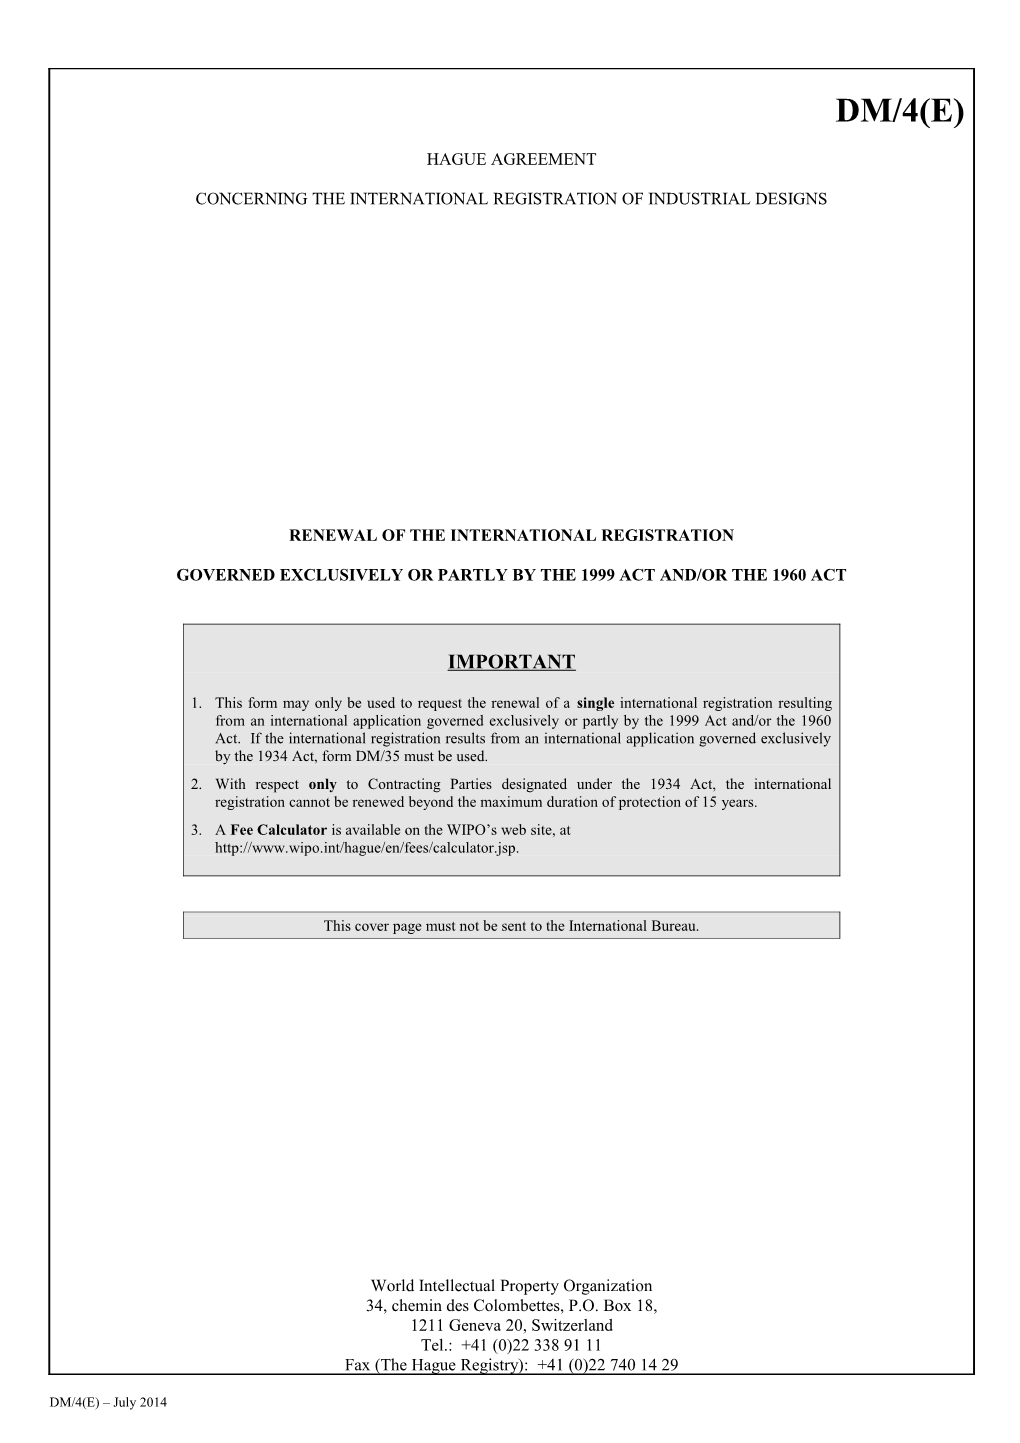 Form DM/4 (Hague System for the International Registration of Industrial Designs)